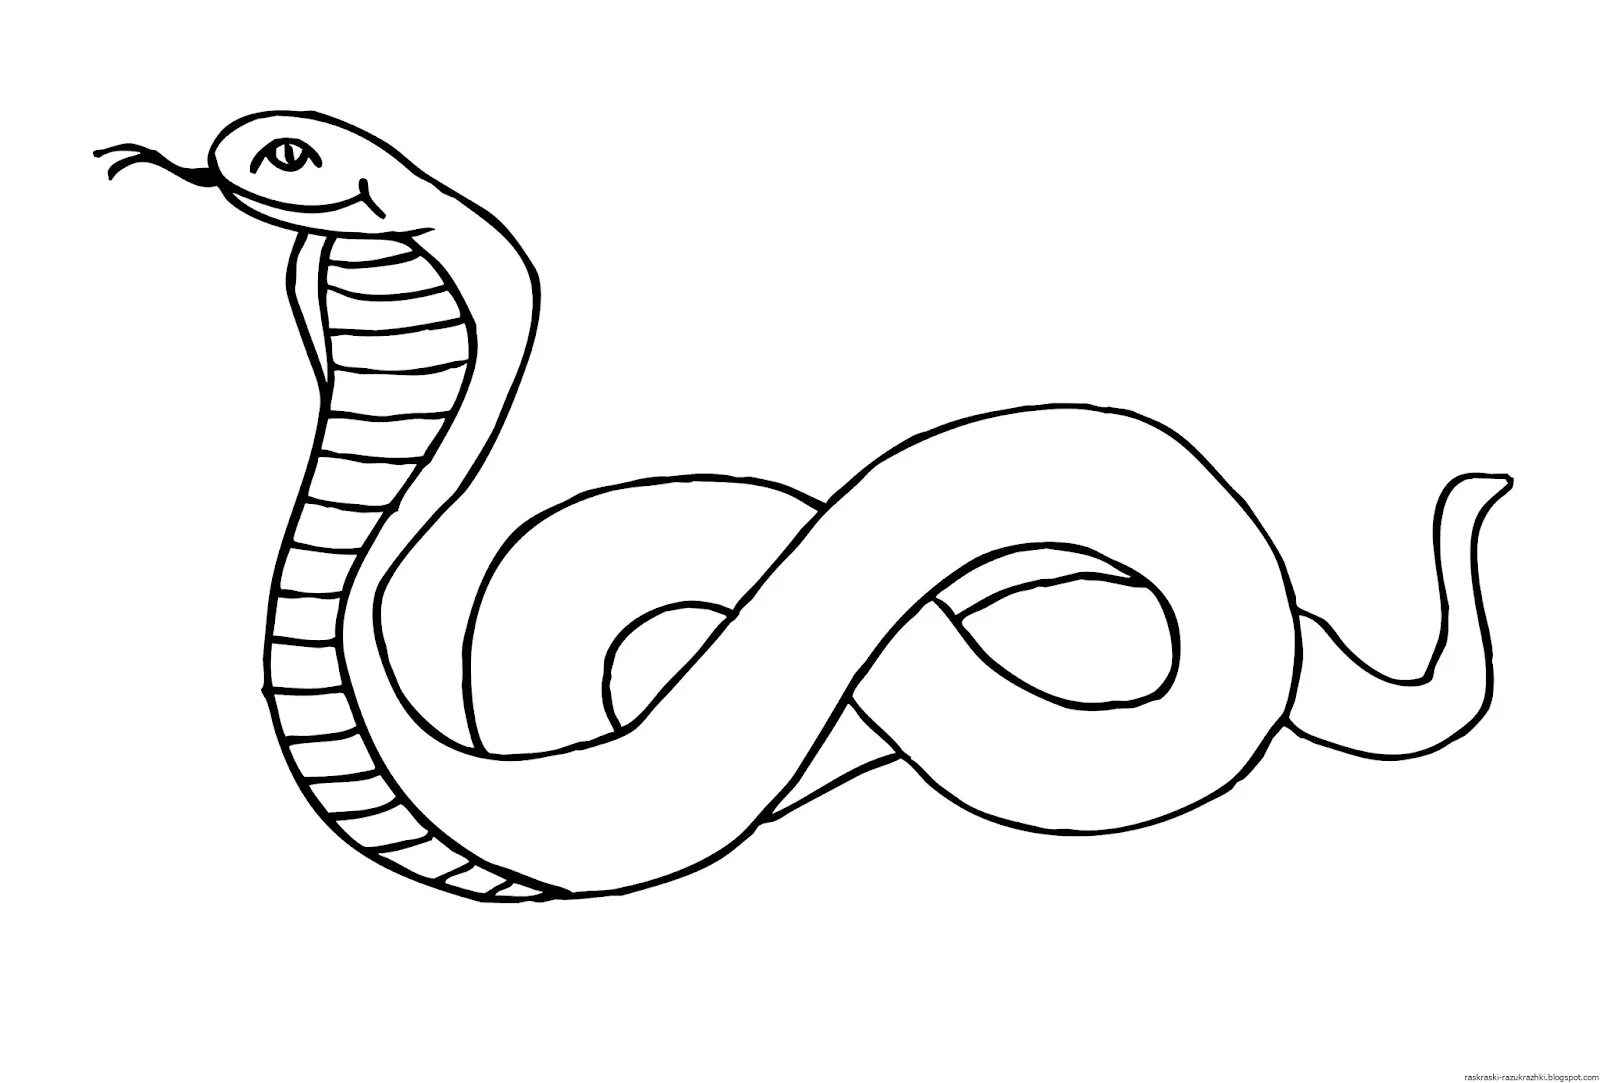 Змея раскраска. Змея раскраска для детей. Раскраска змеи для детей. Картинка змеи раскраска. Раскраска змей для детей